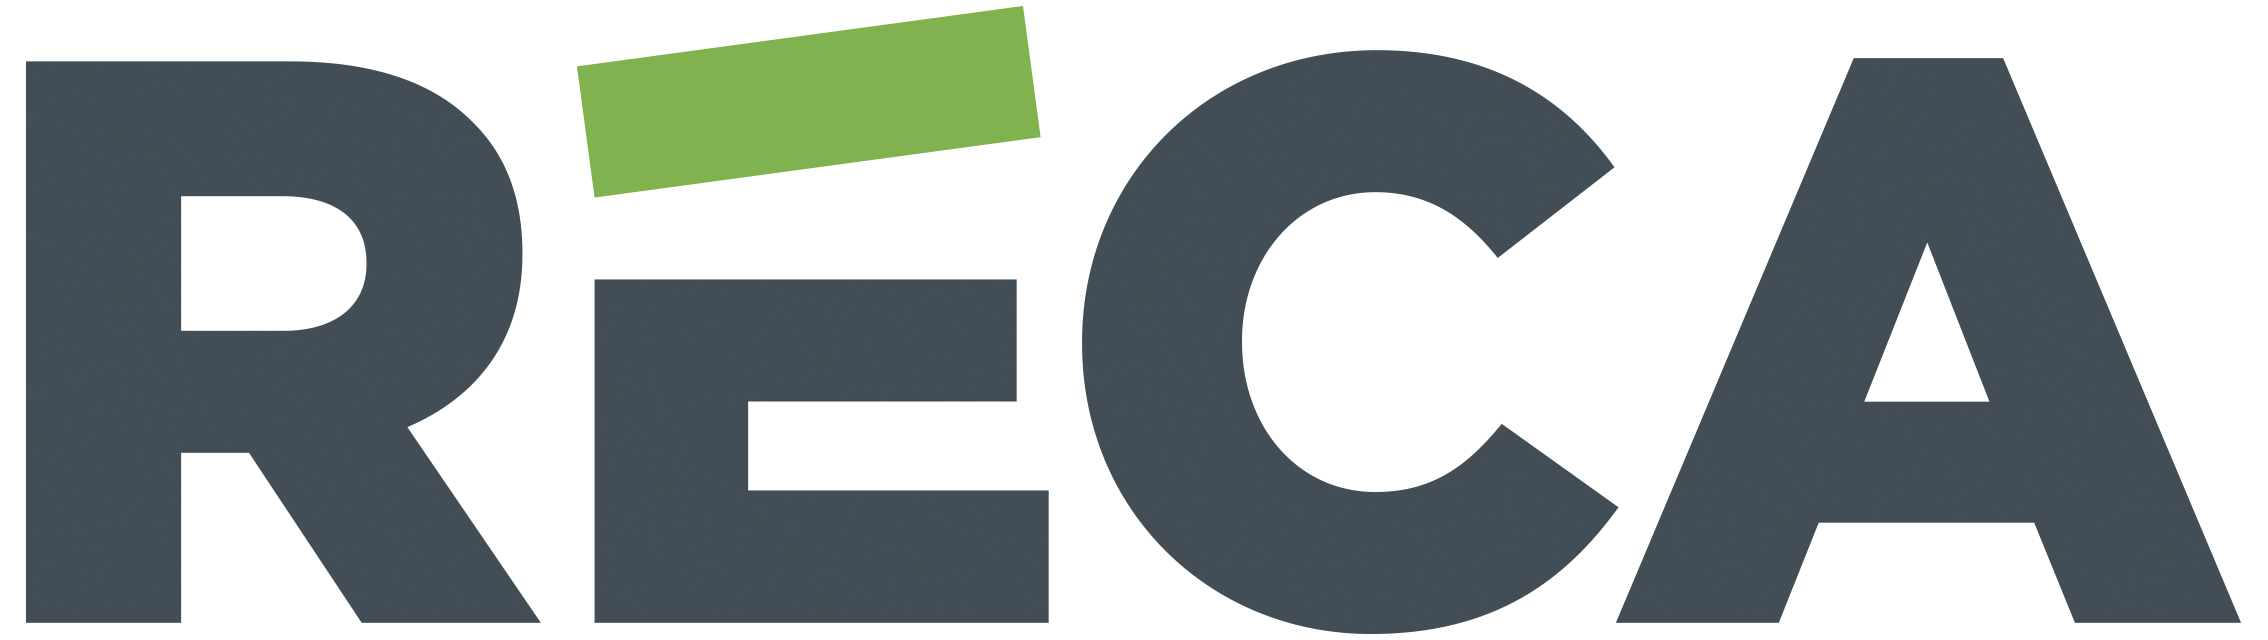  - Logo : RECA